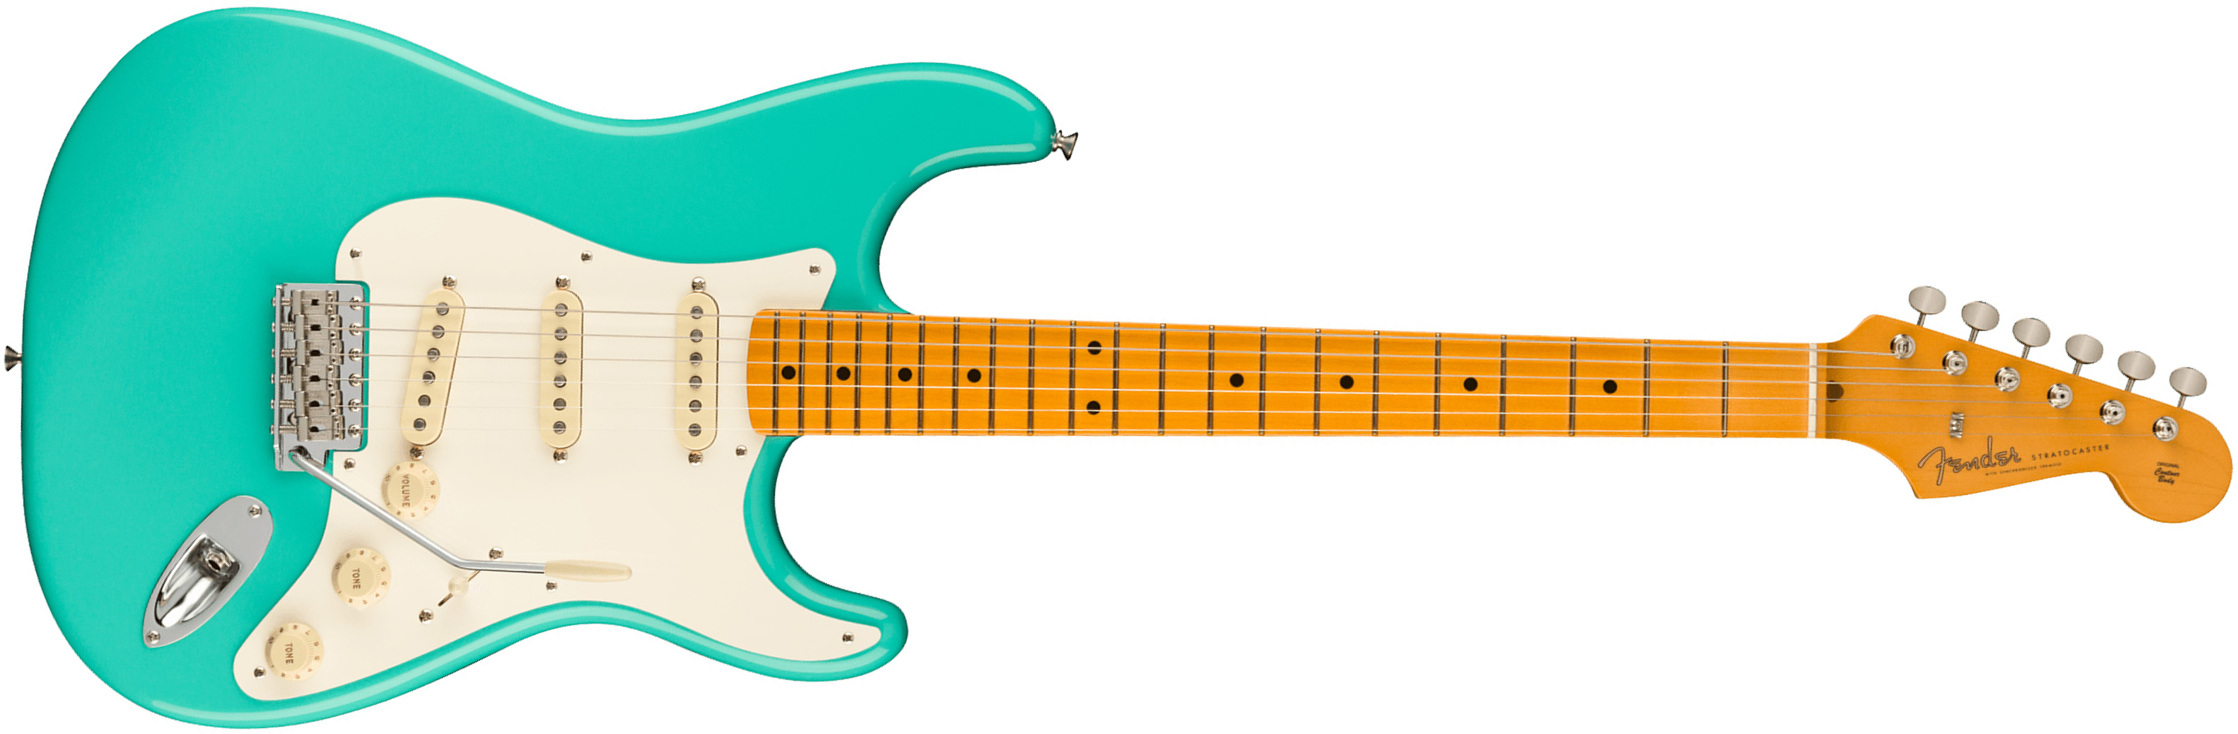 Fender Strat 1957 American Vintage Ii Usa 3s Trem Mn - Sea Foam Green - Str shape electric guitar - Main picture